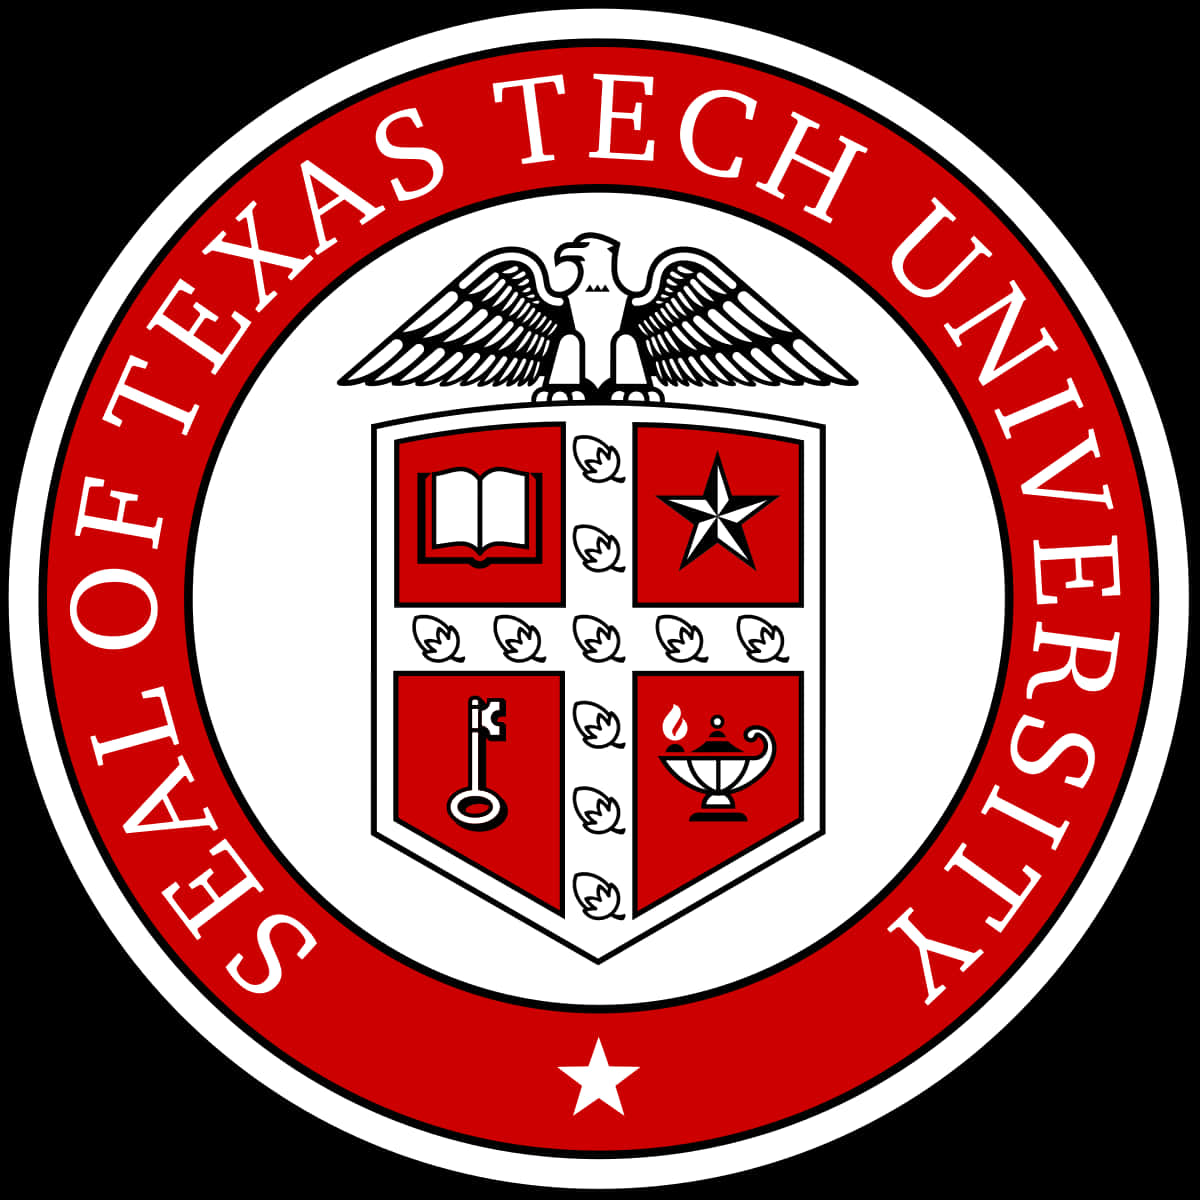 Seal Of Texas Tech University Wallpaper